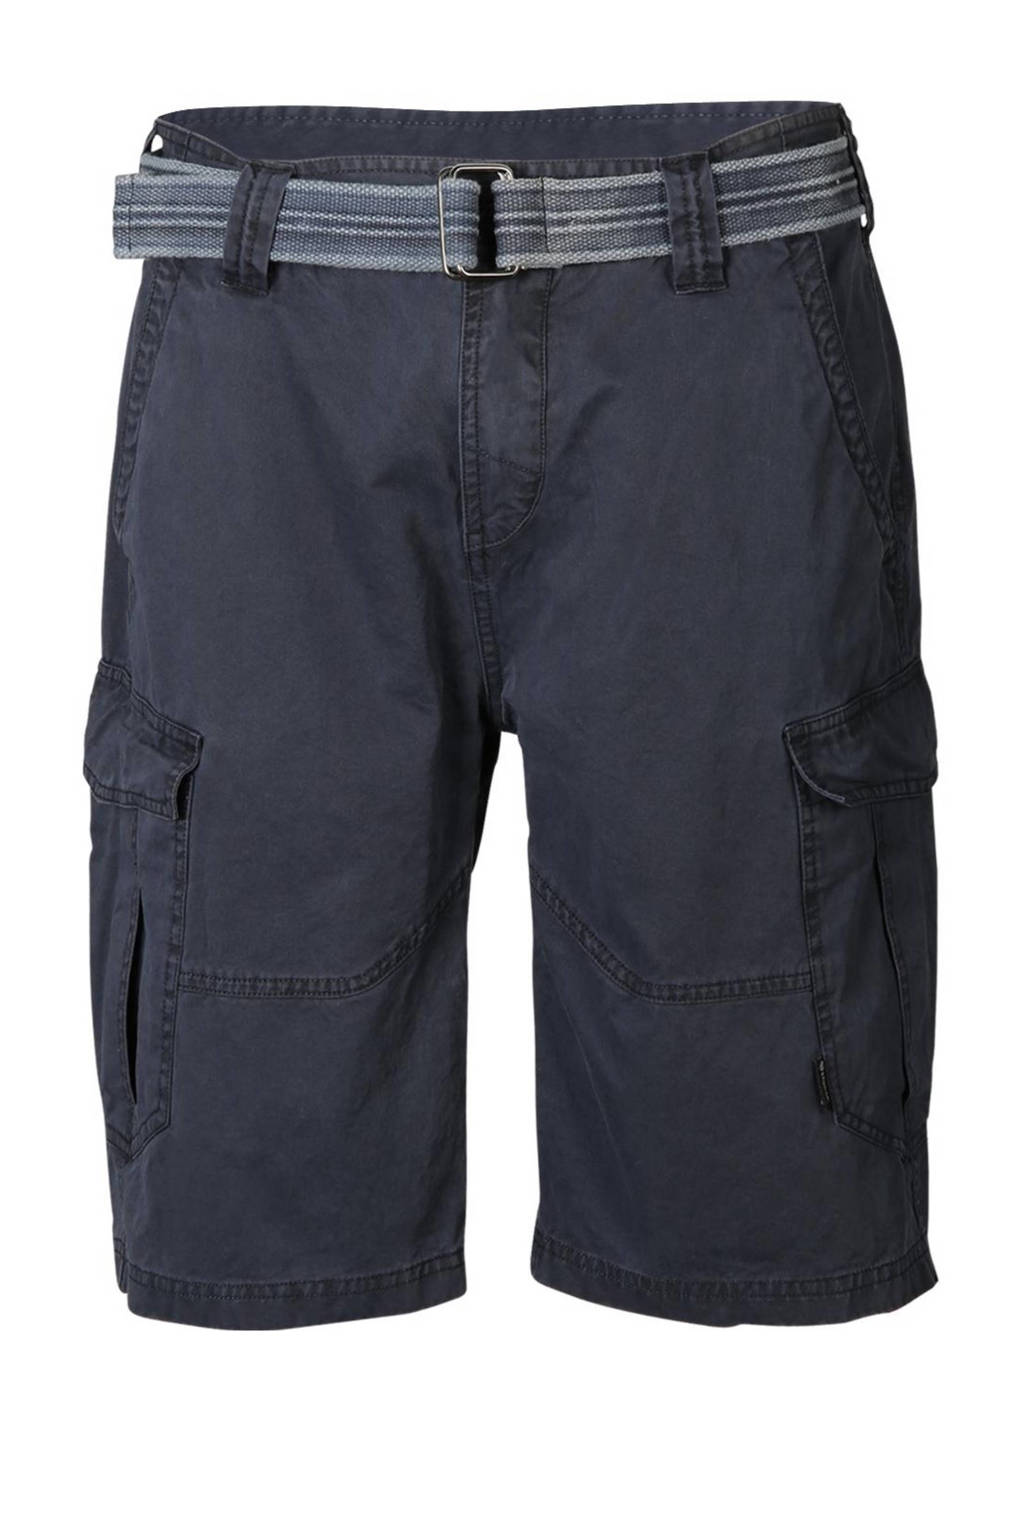 Brunotti korte outdoor broek CaldECO-N donkerblauw